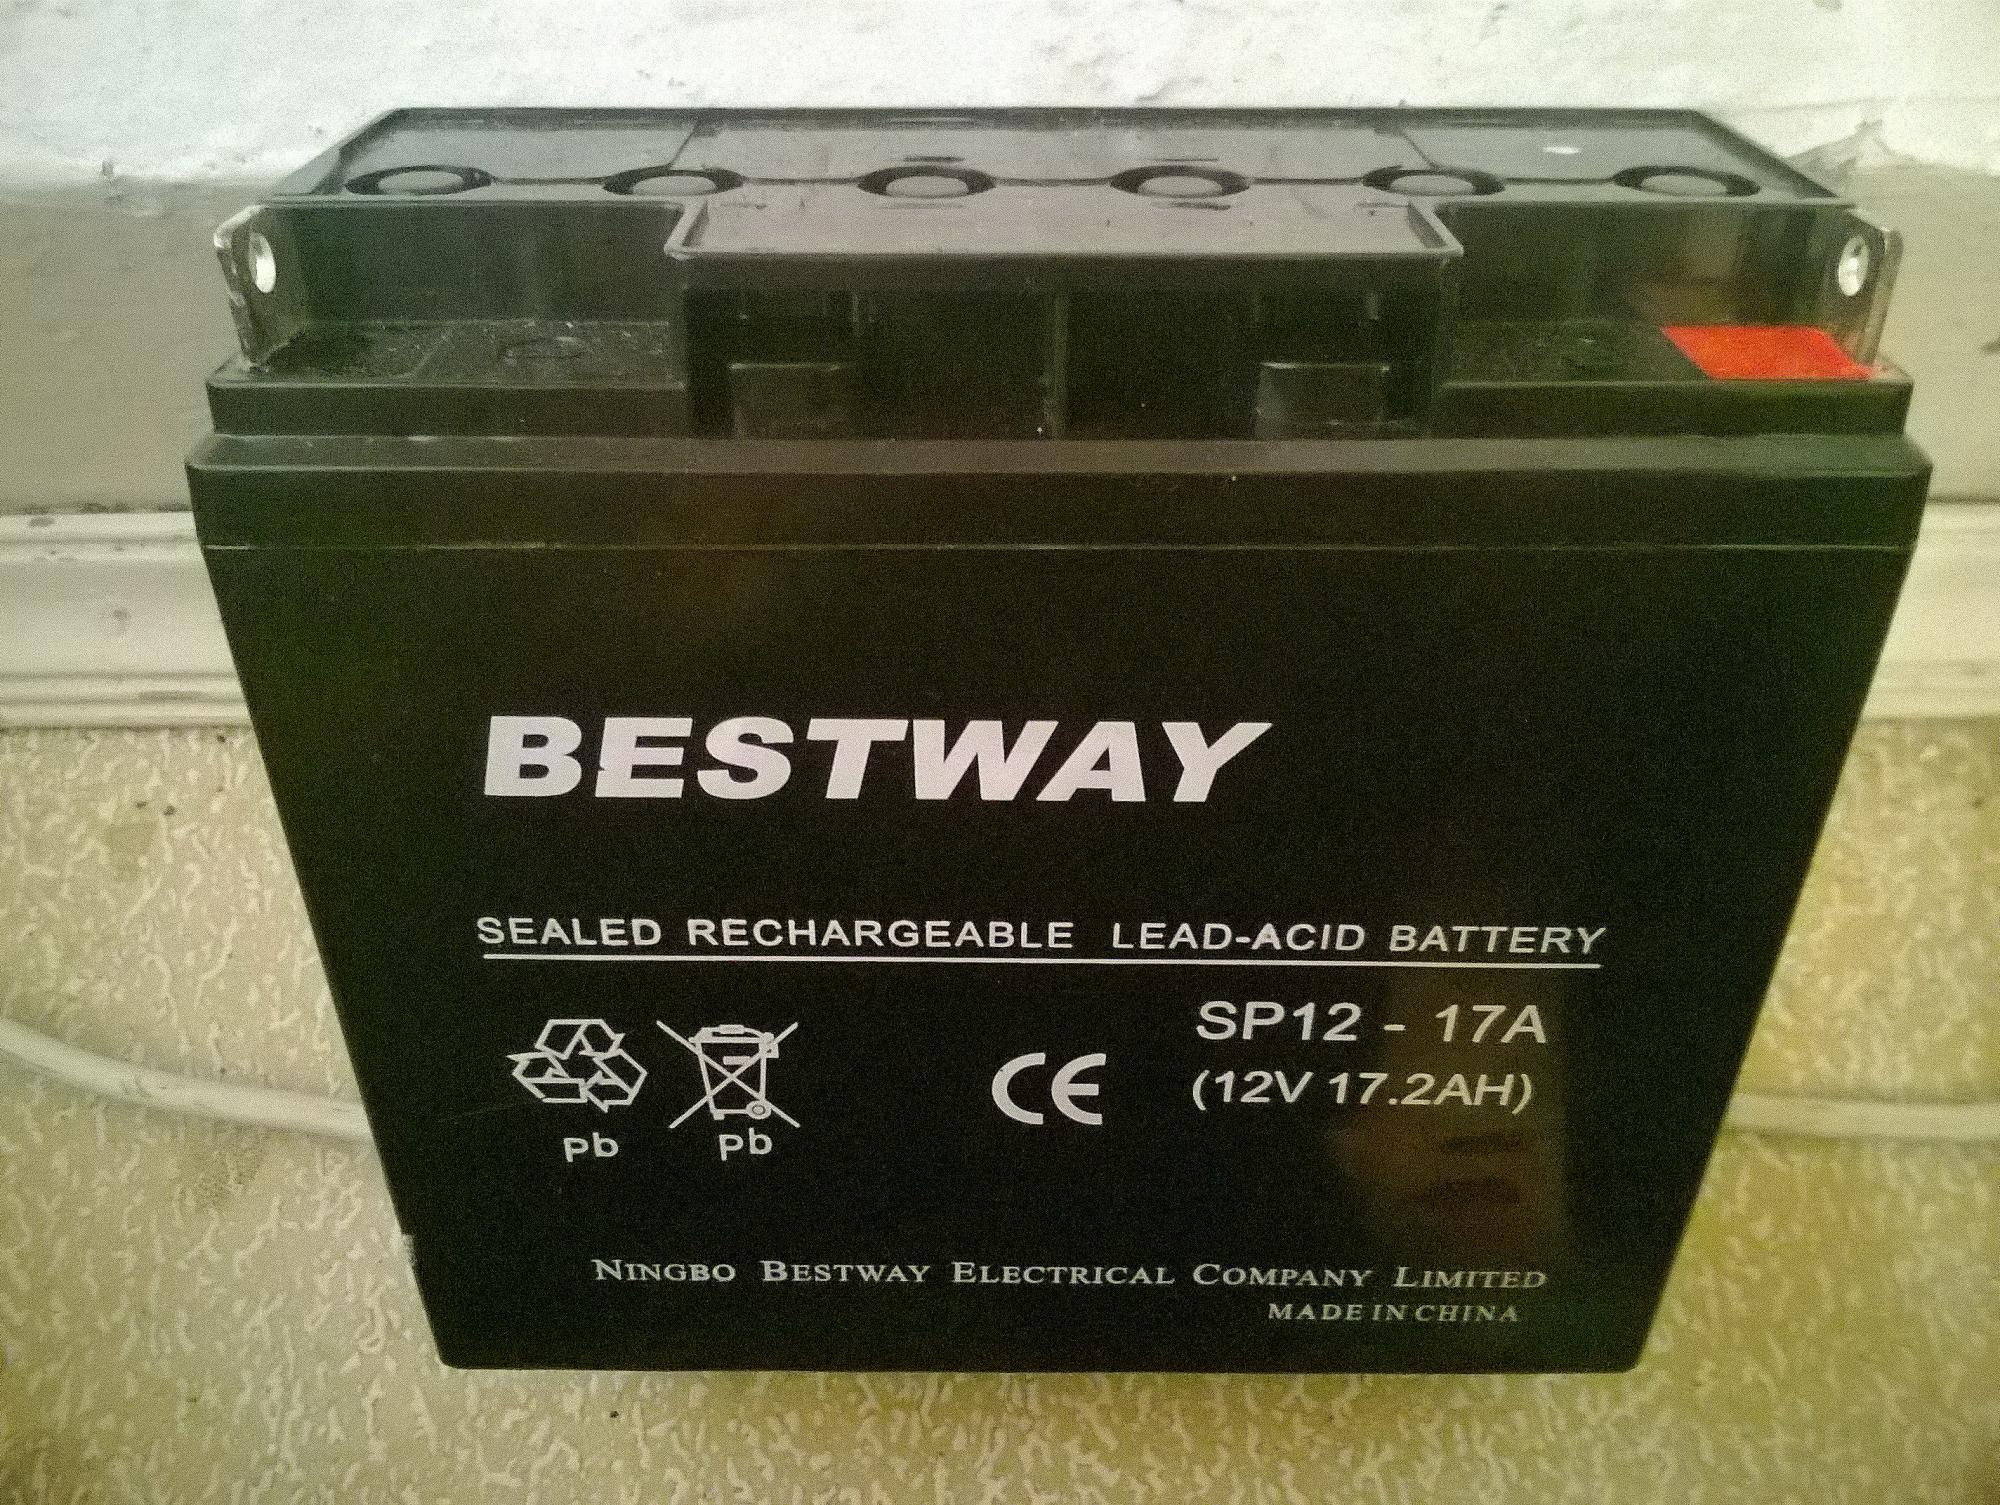 Аккумулятор 12v 17ah. АКБ свинцовый 7 Ah. Аккумулятор Bestway sp12-9a (12v 9ah). Sealed Rechargeable lead-acid Battery sp12-17a Bestway. АКБ Bestway sp12-17a.